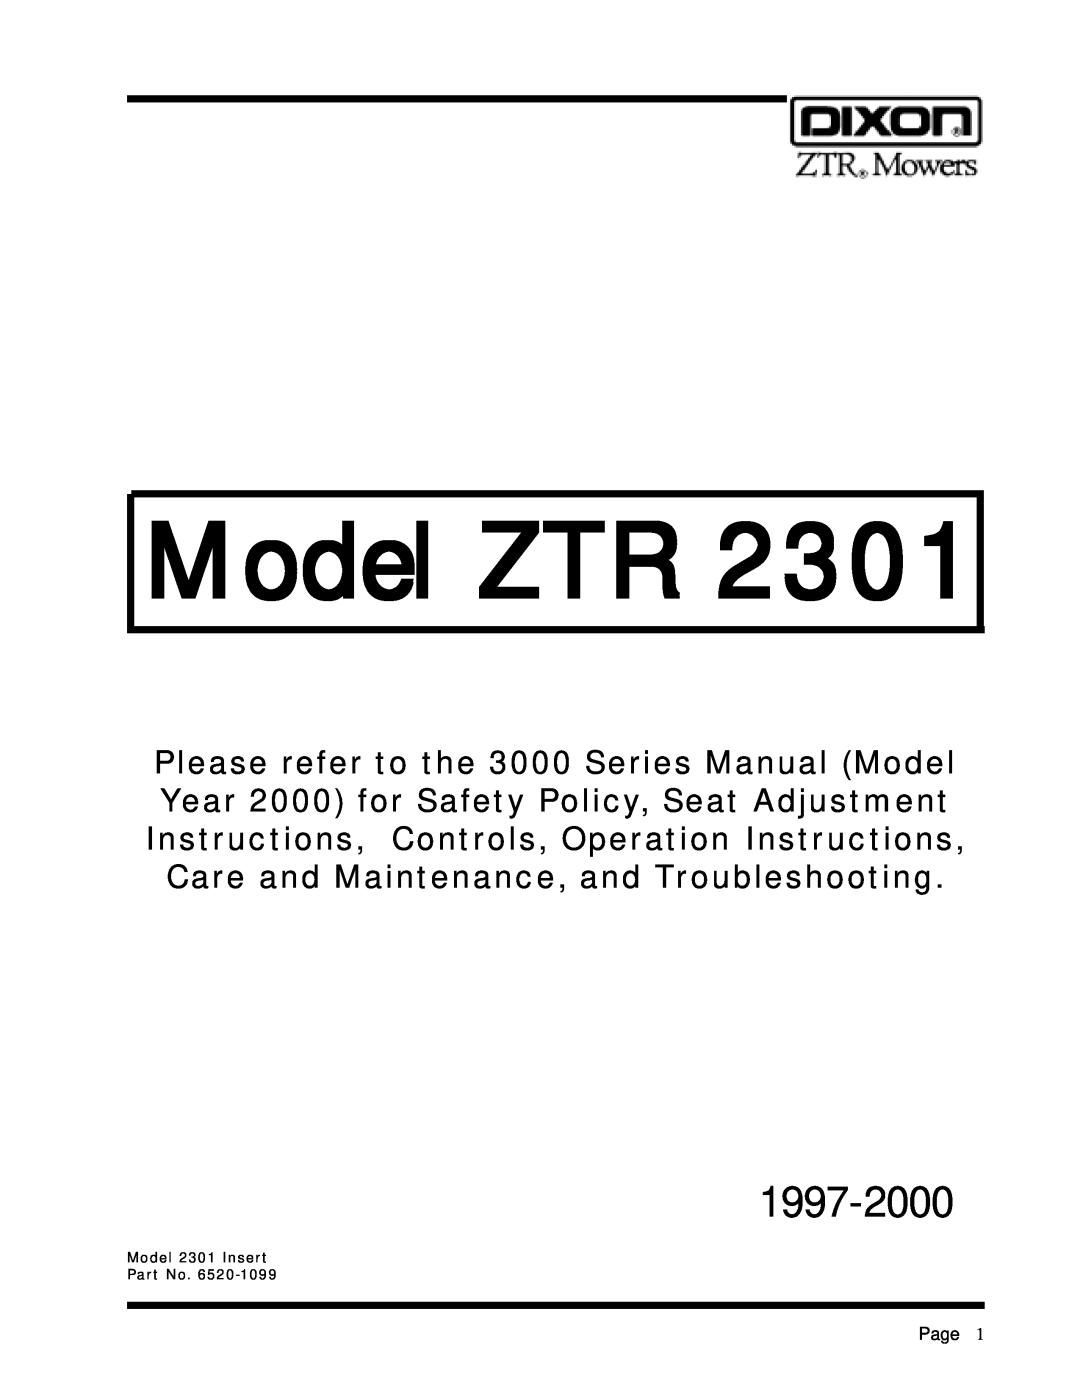 Dixon ZTR 2301 manual Model ZTR, 1997-2000, Page, Model 2301 Insert 